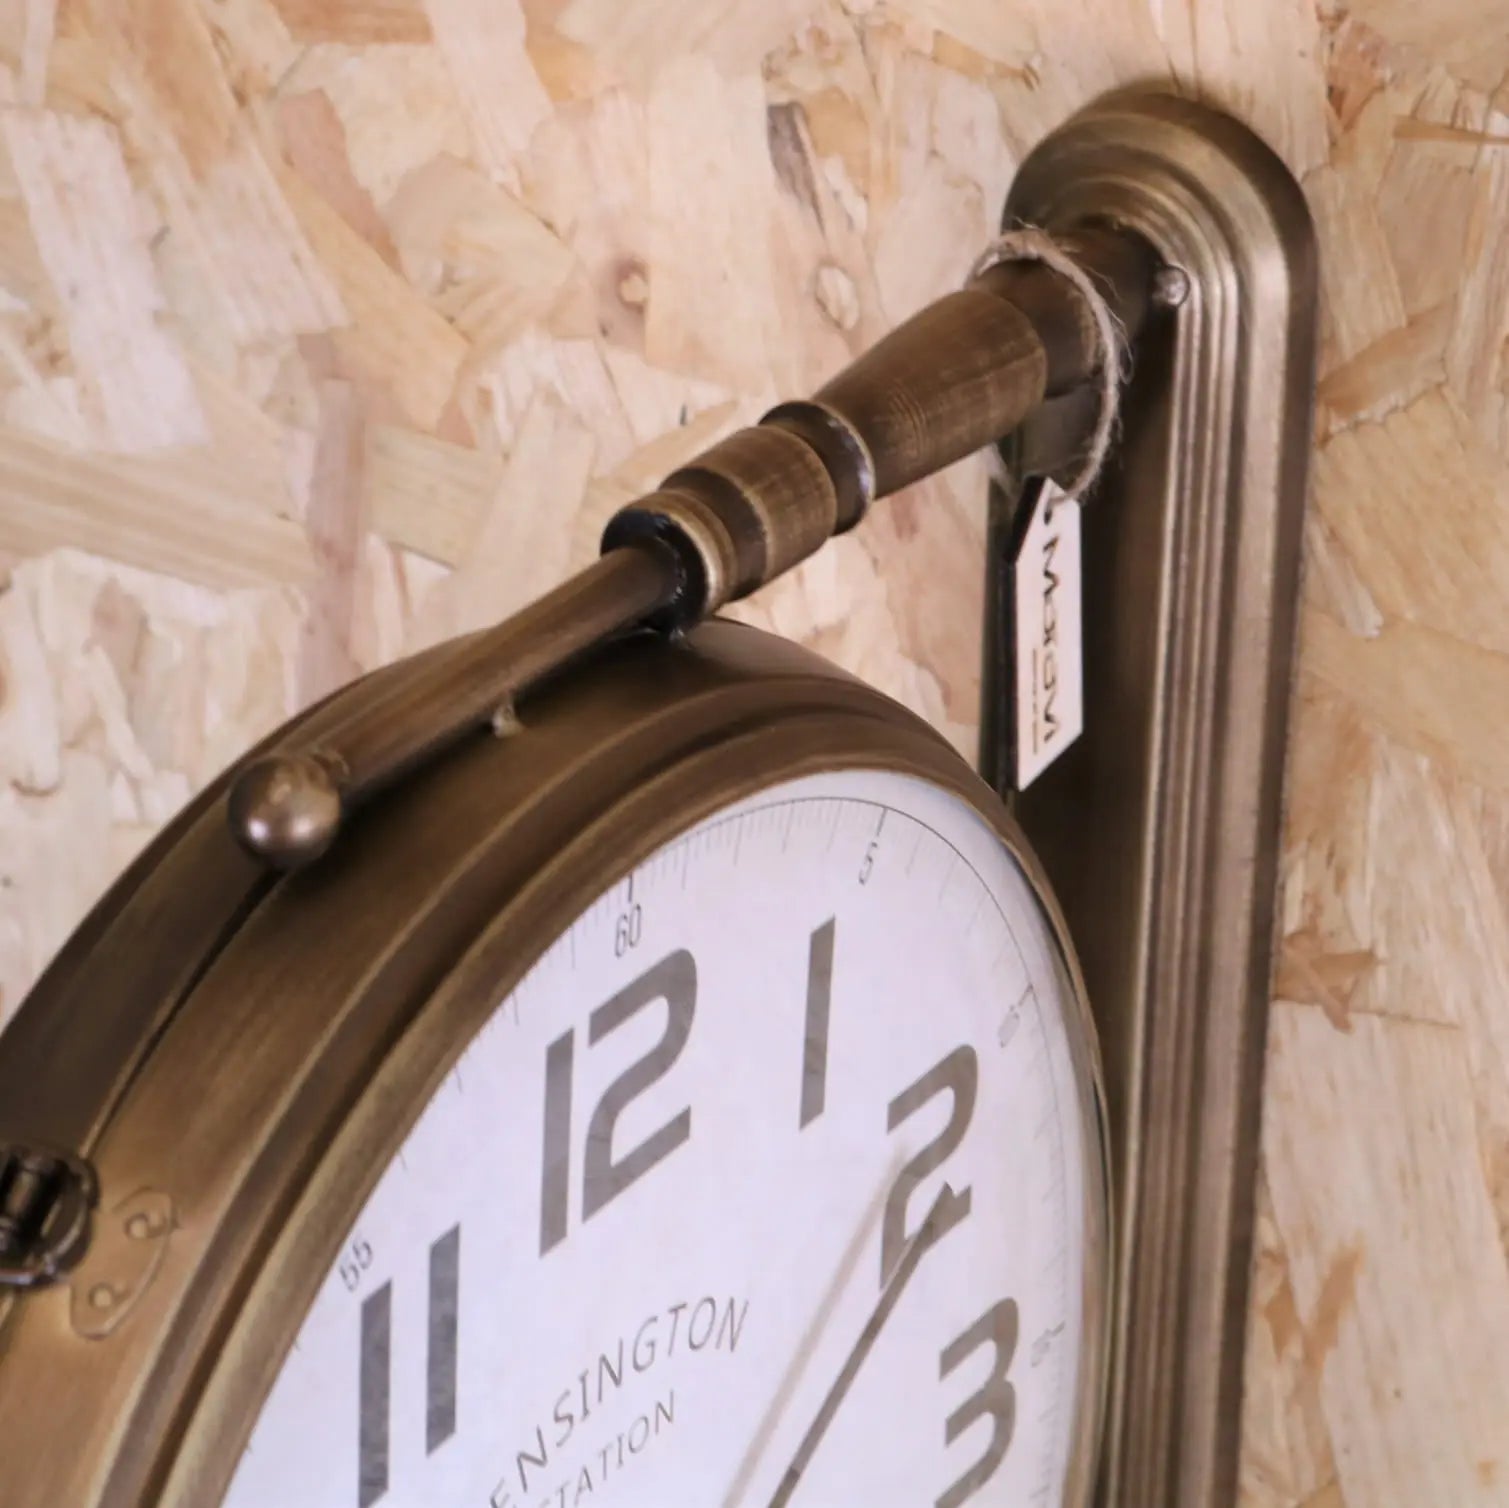 Kensington Station Railway Style Double Sided Clock - Closeup of Metal Frame